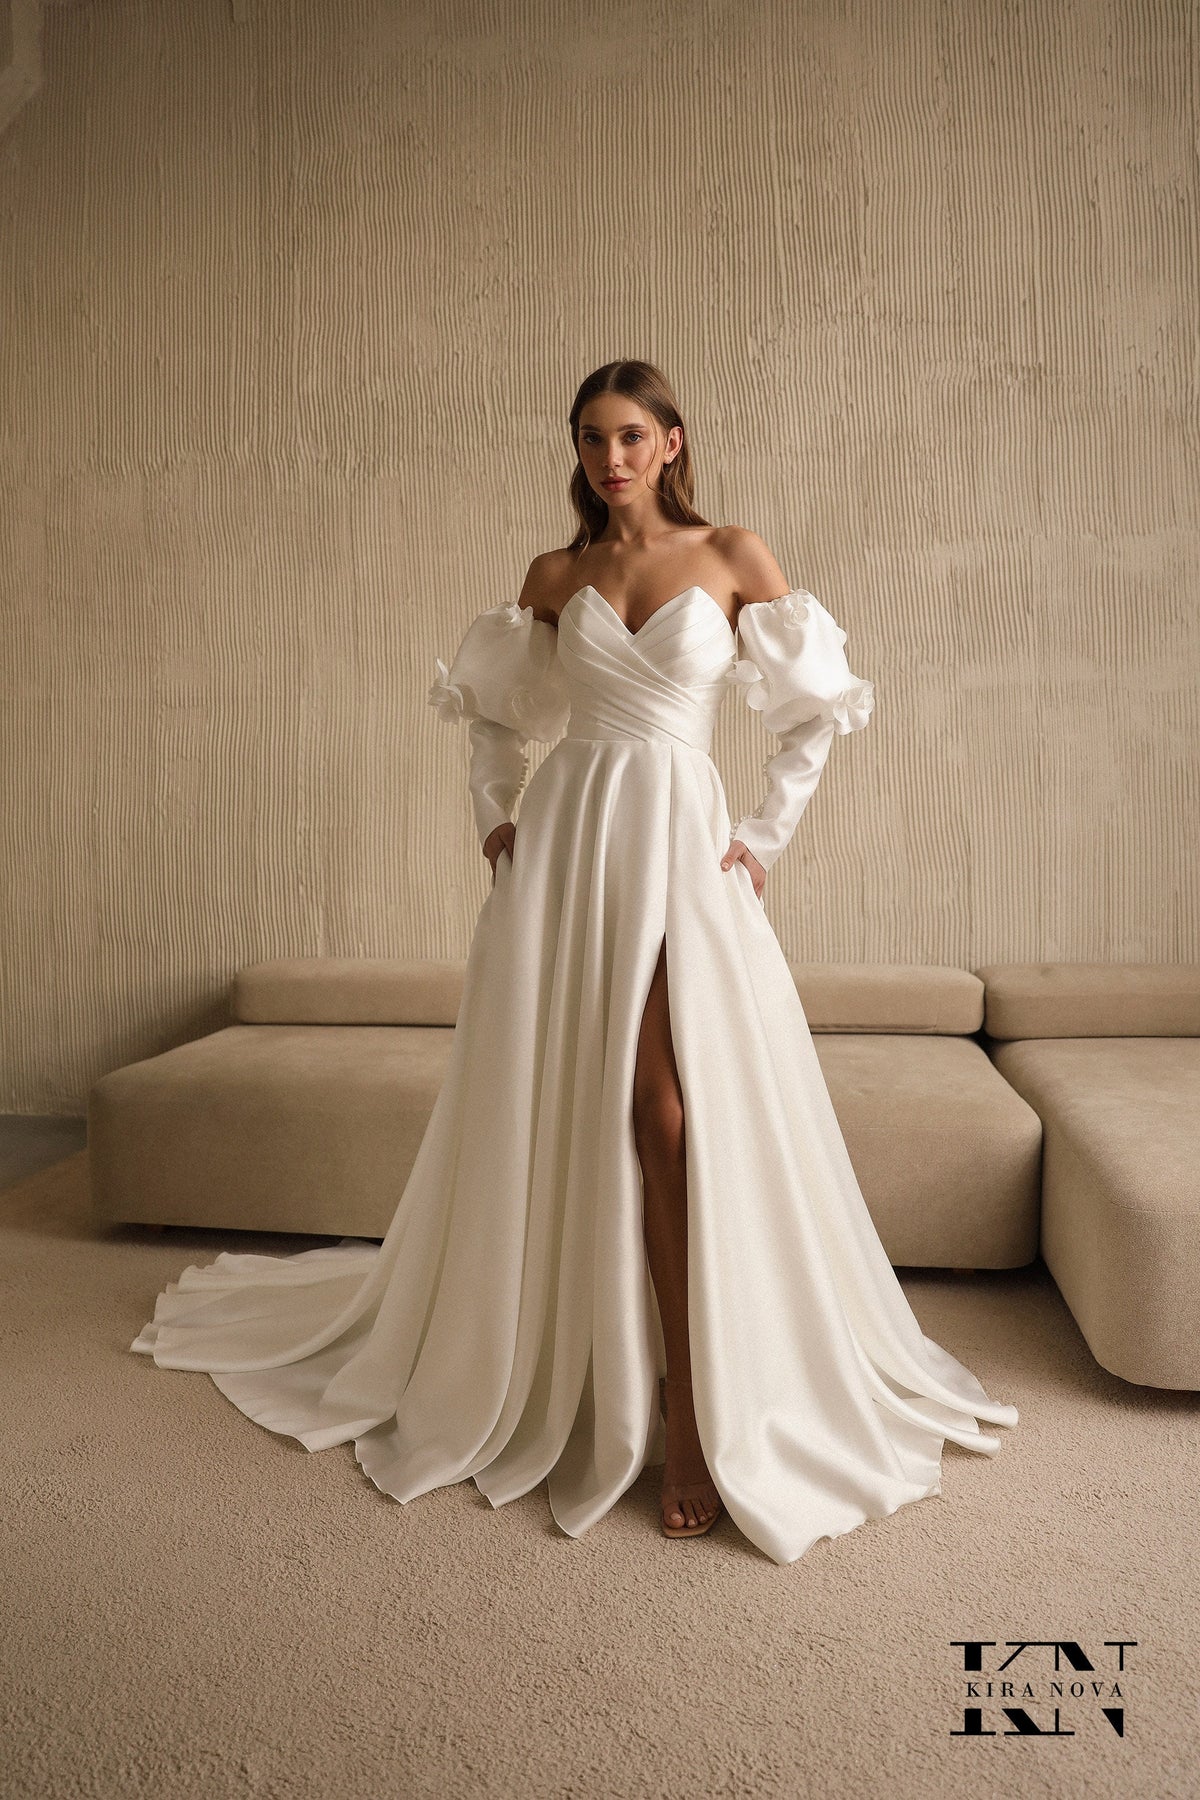 Classic Sleeveless Strapless Wedding Dress Off White Bridal Gown Full Aline With Train Corset Back Dress Sweetheart Neckline Side Slit